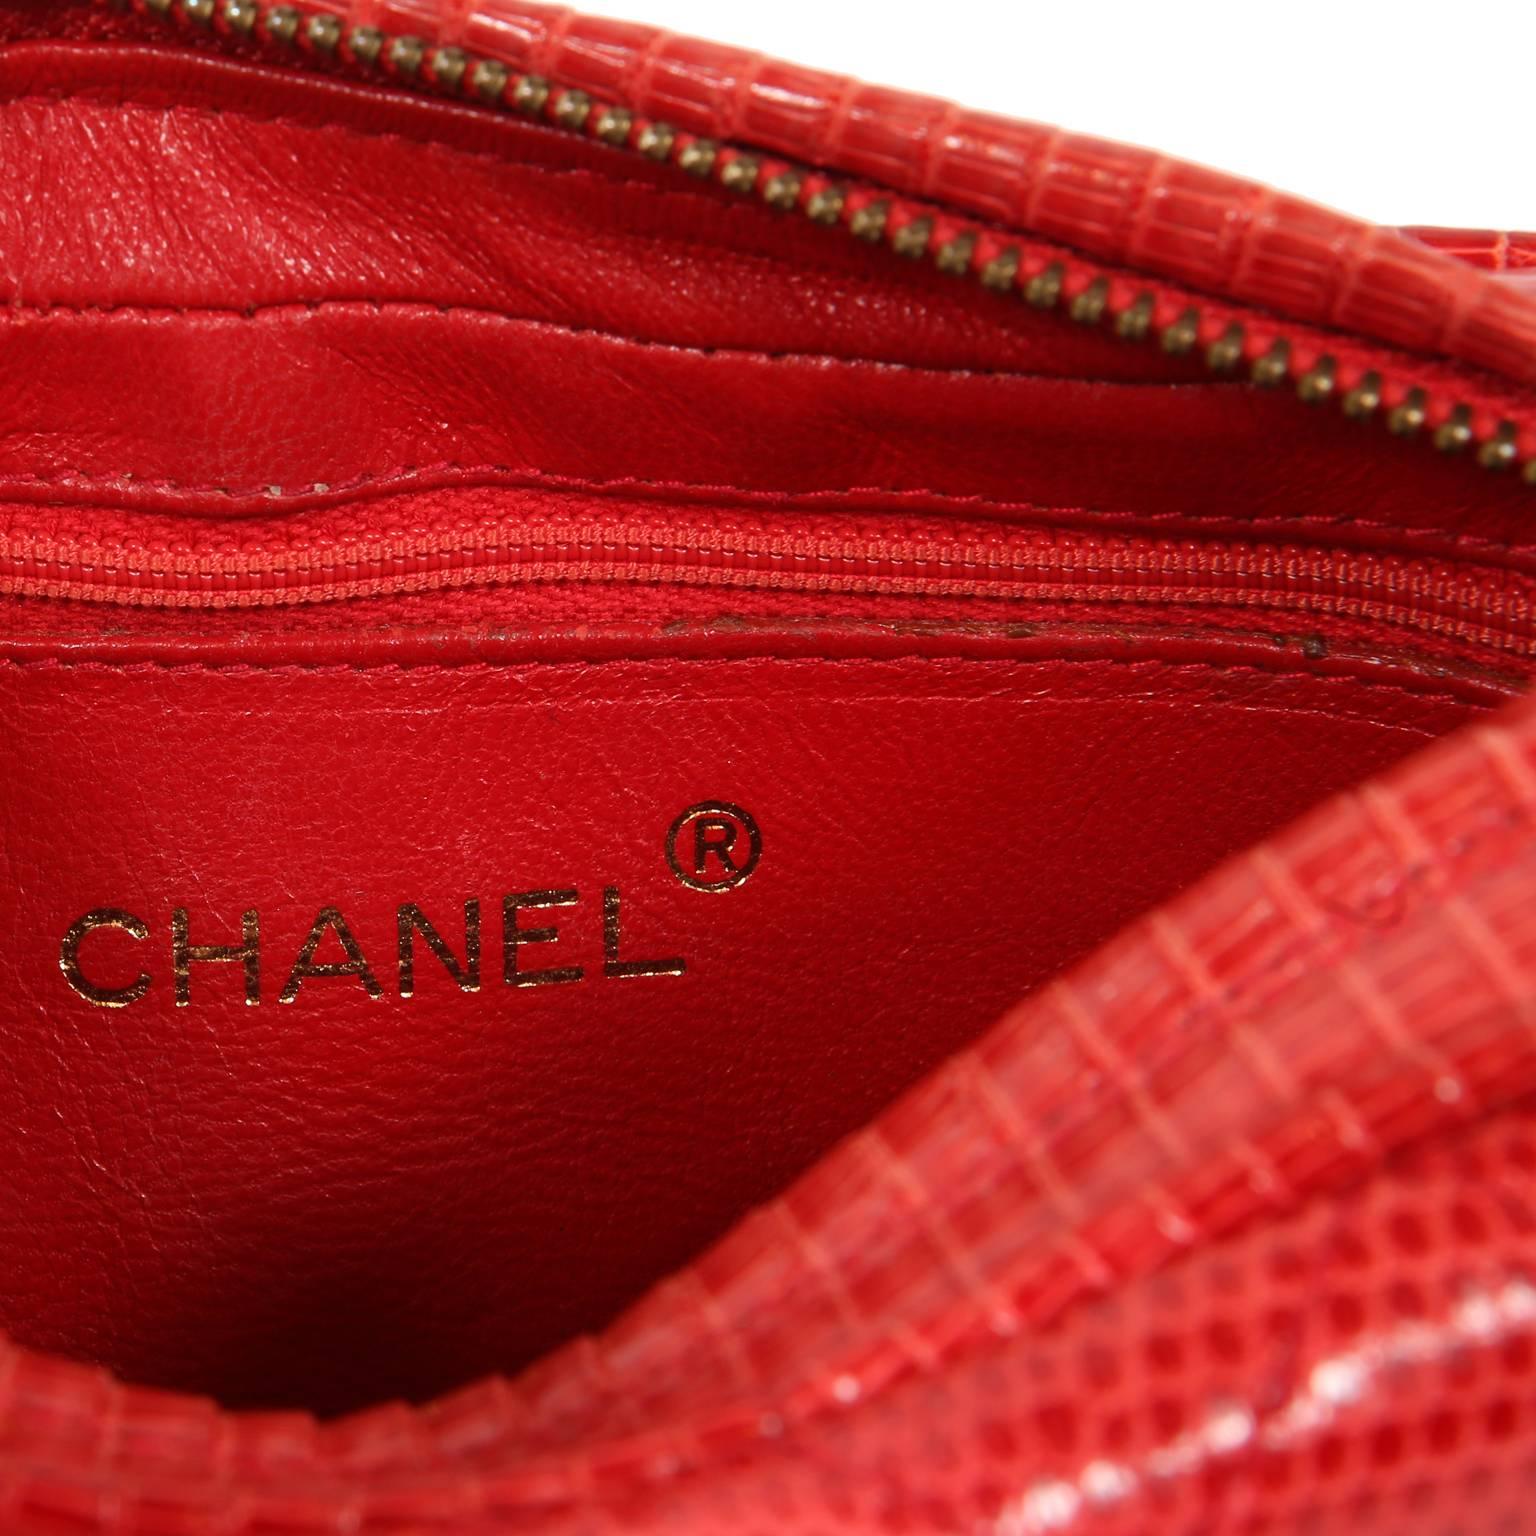 Chanel Red Lizard Vintage Tassel Clutch For Sale 5